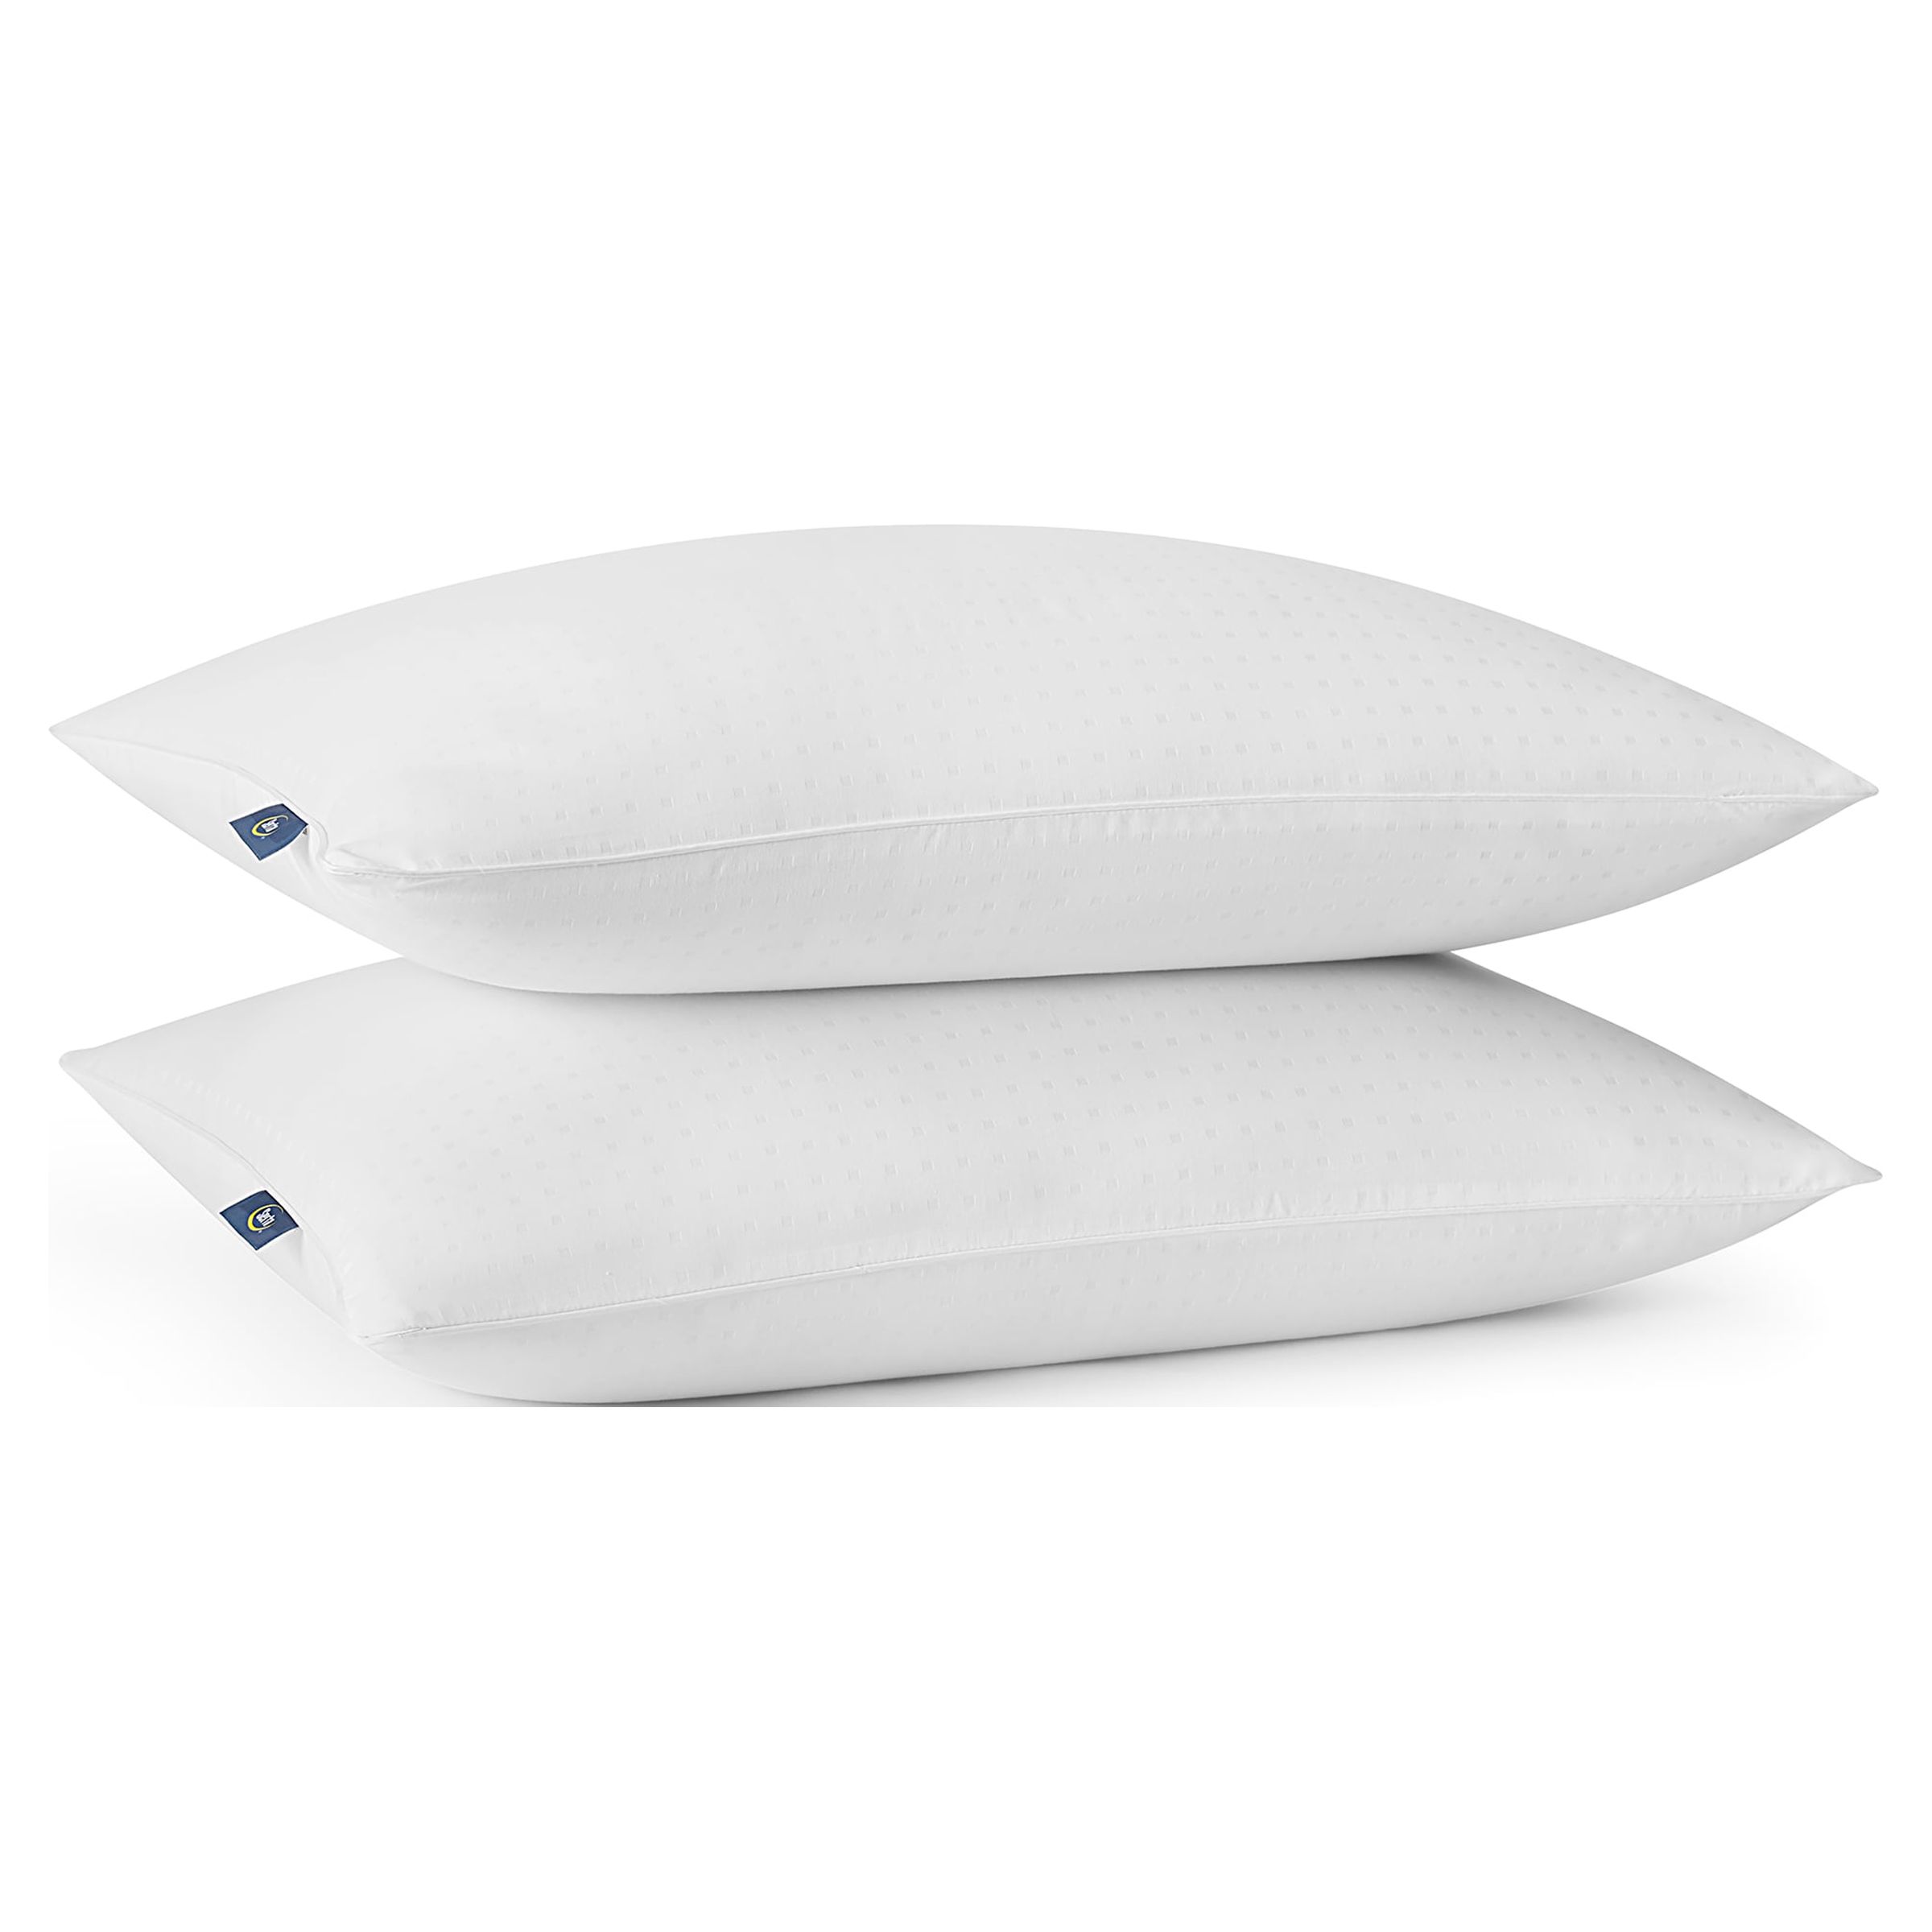 Serta Sertapedic Won't Go Flat White Pillow, 2 Count - image 5 of 5